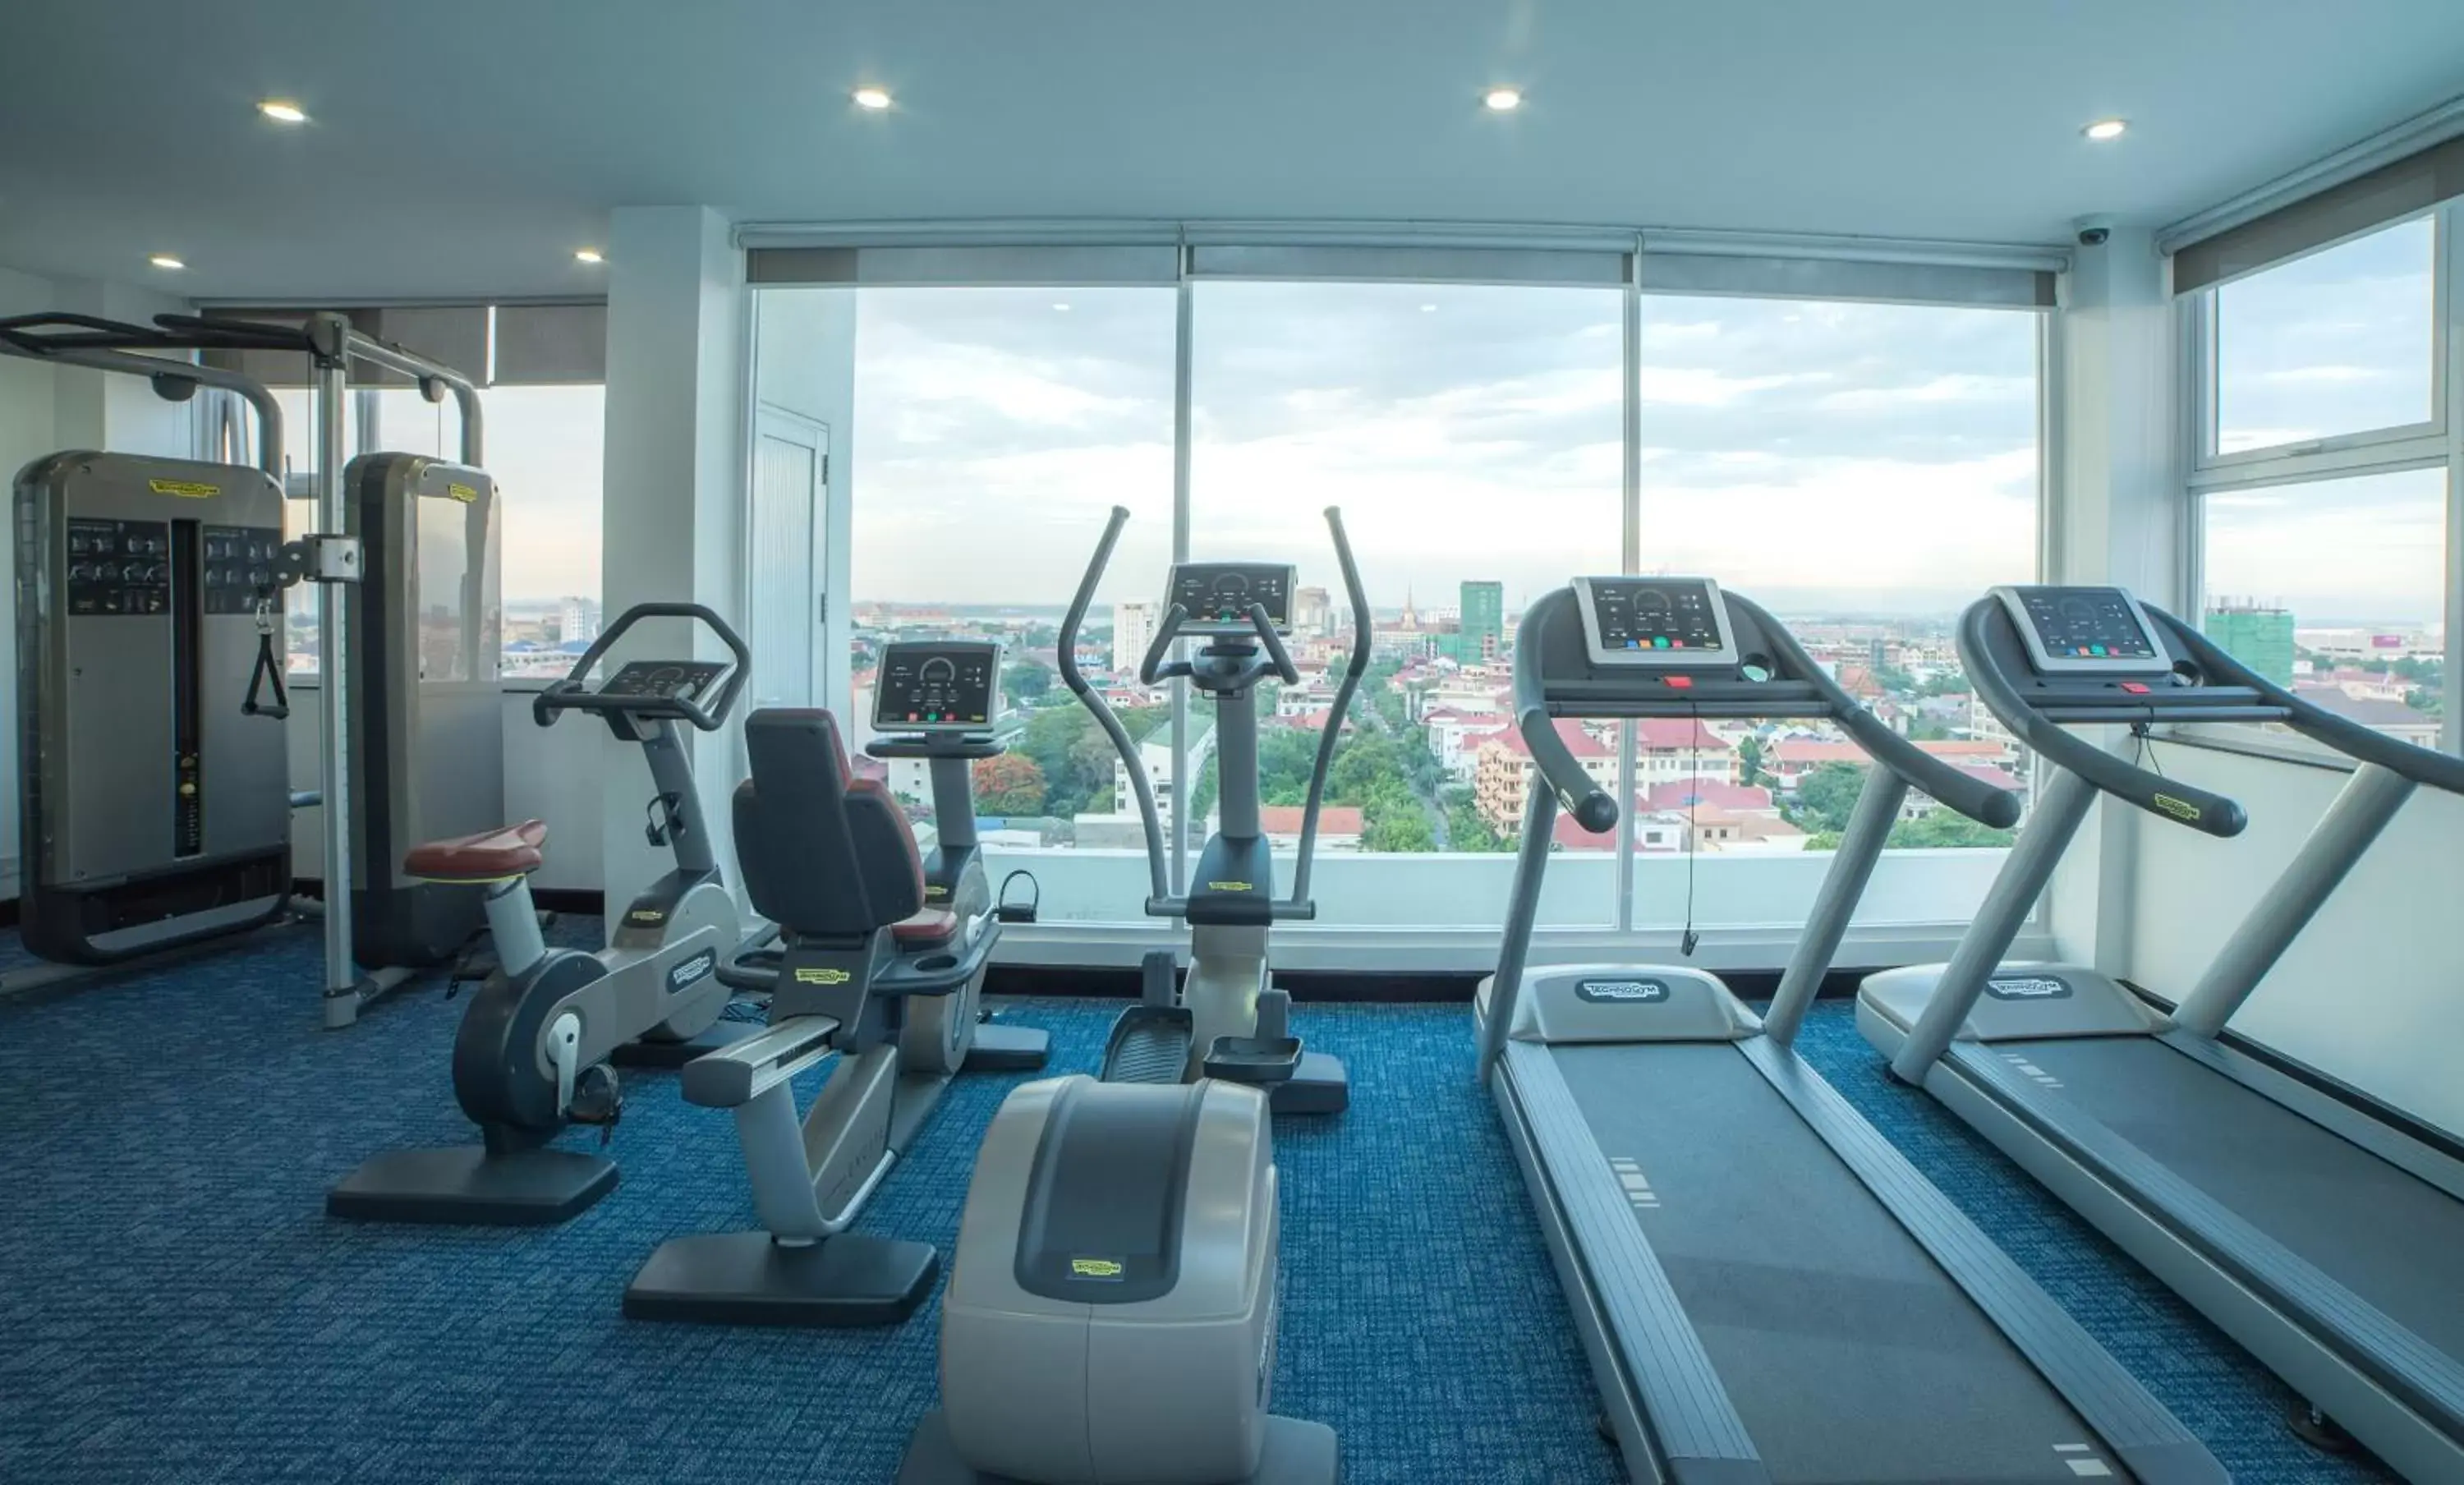 Fitness centre/facilities, Fitness Center/Facilities in Phnom Penh Katari Hotel